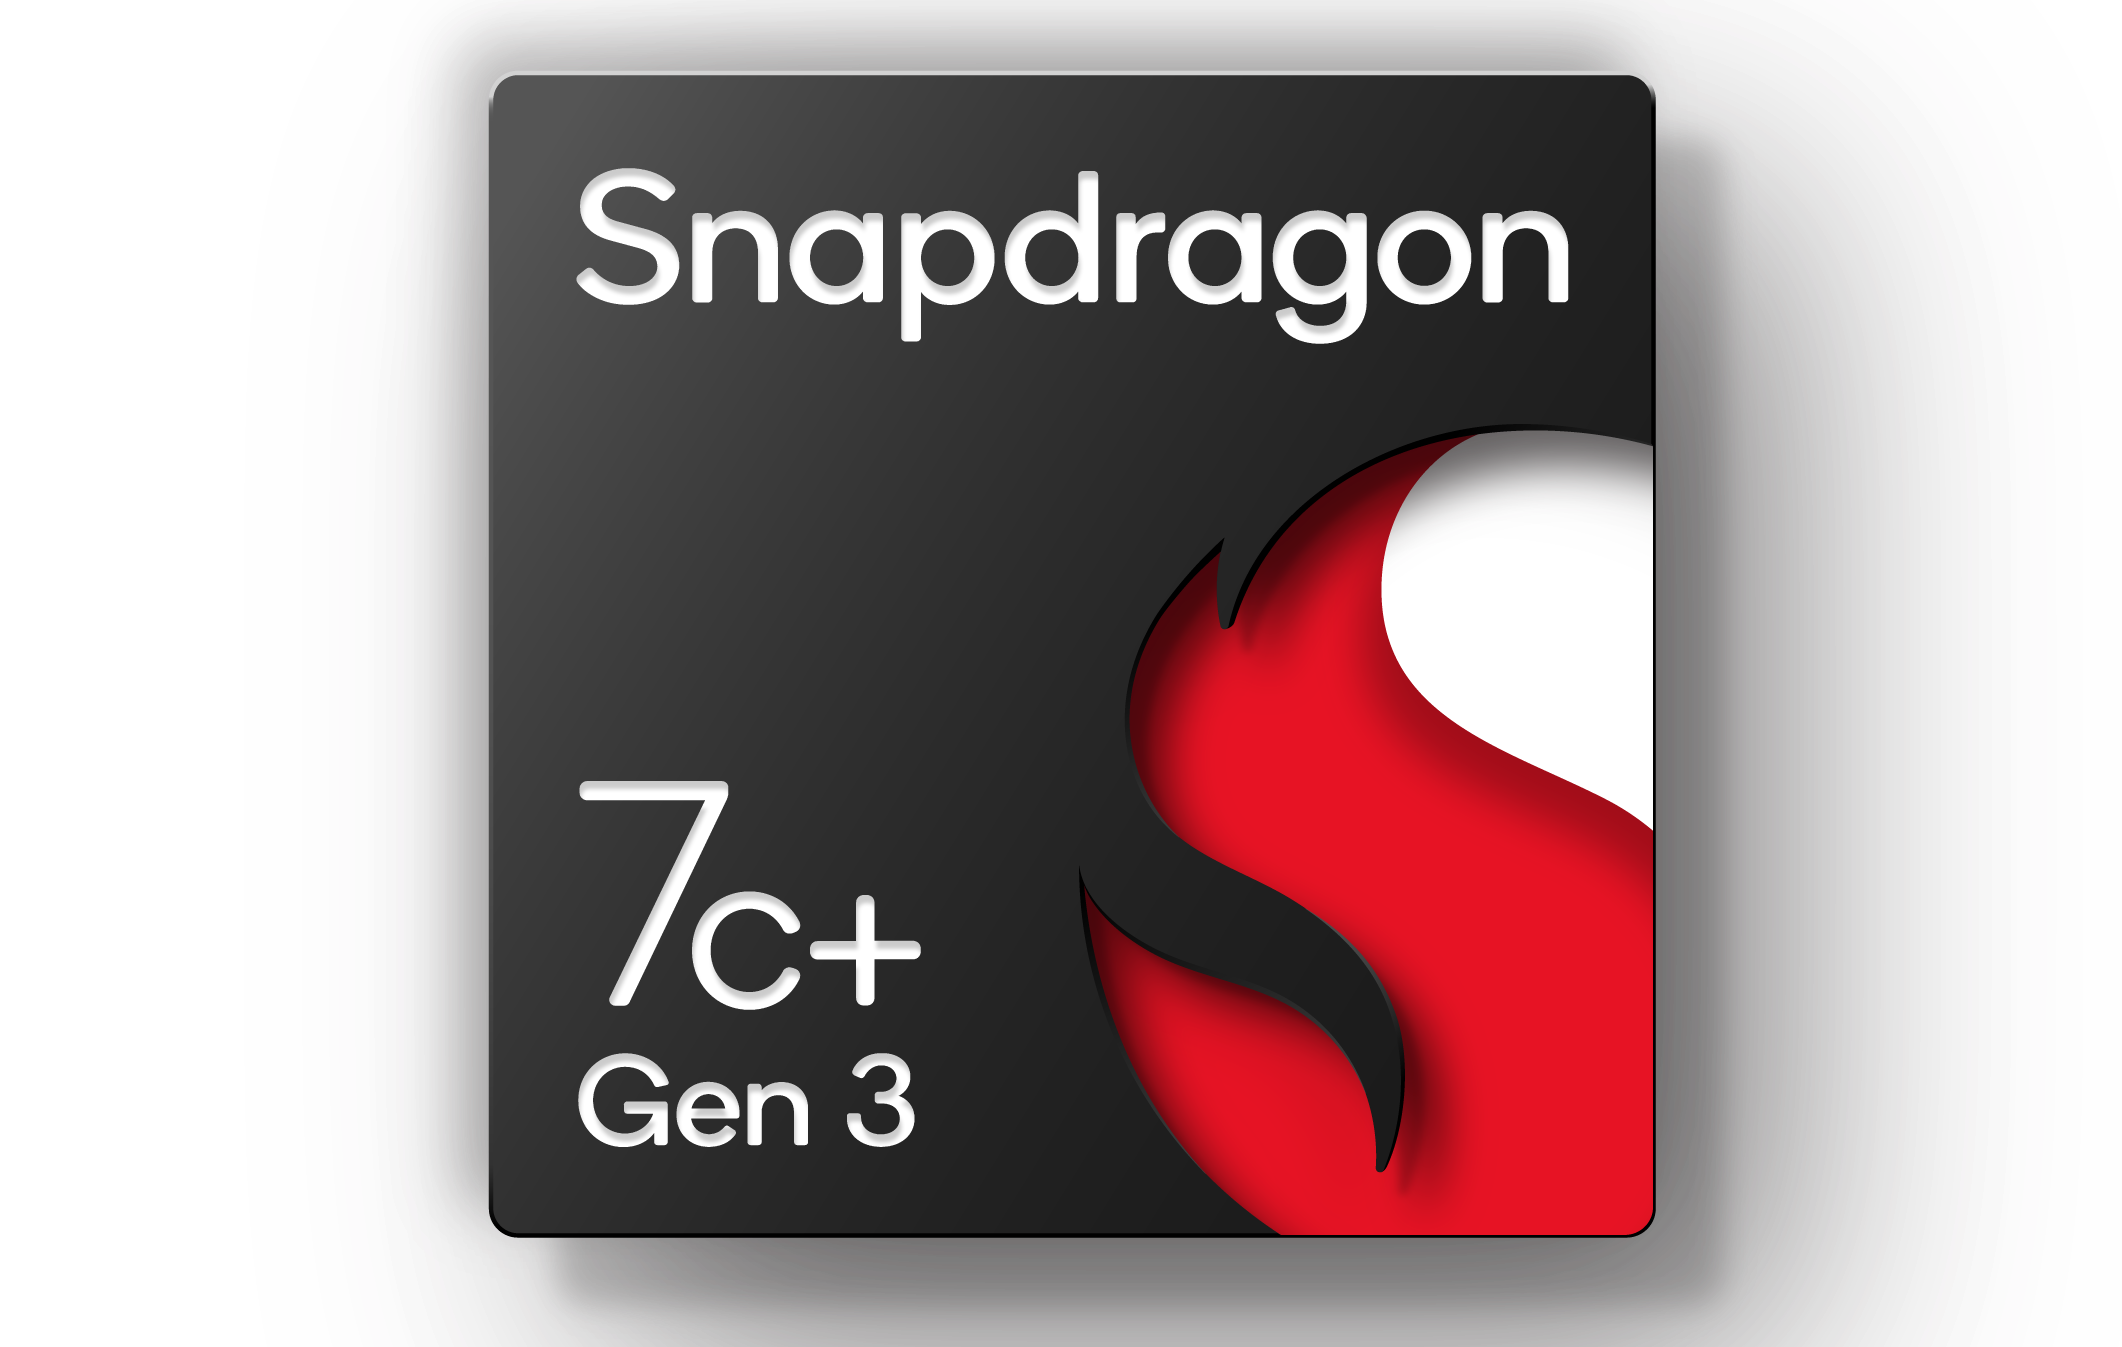 Snapdragon 7c+ Gen 3 Compute Platform_Badge